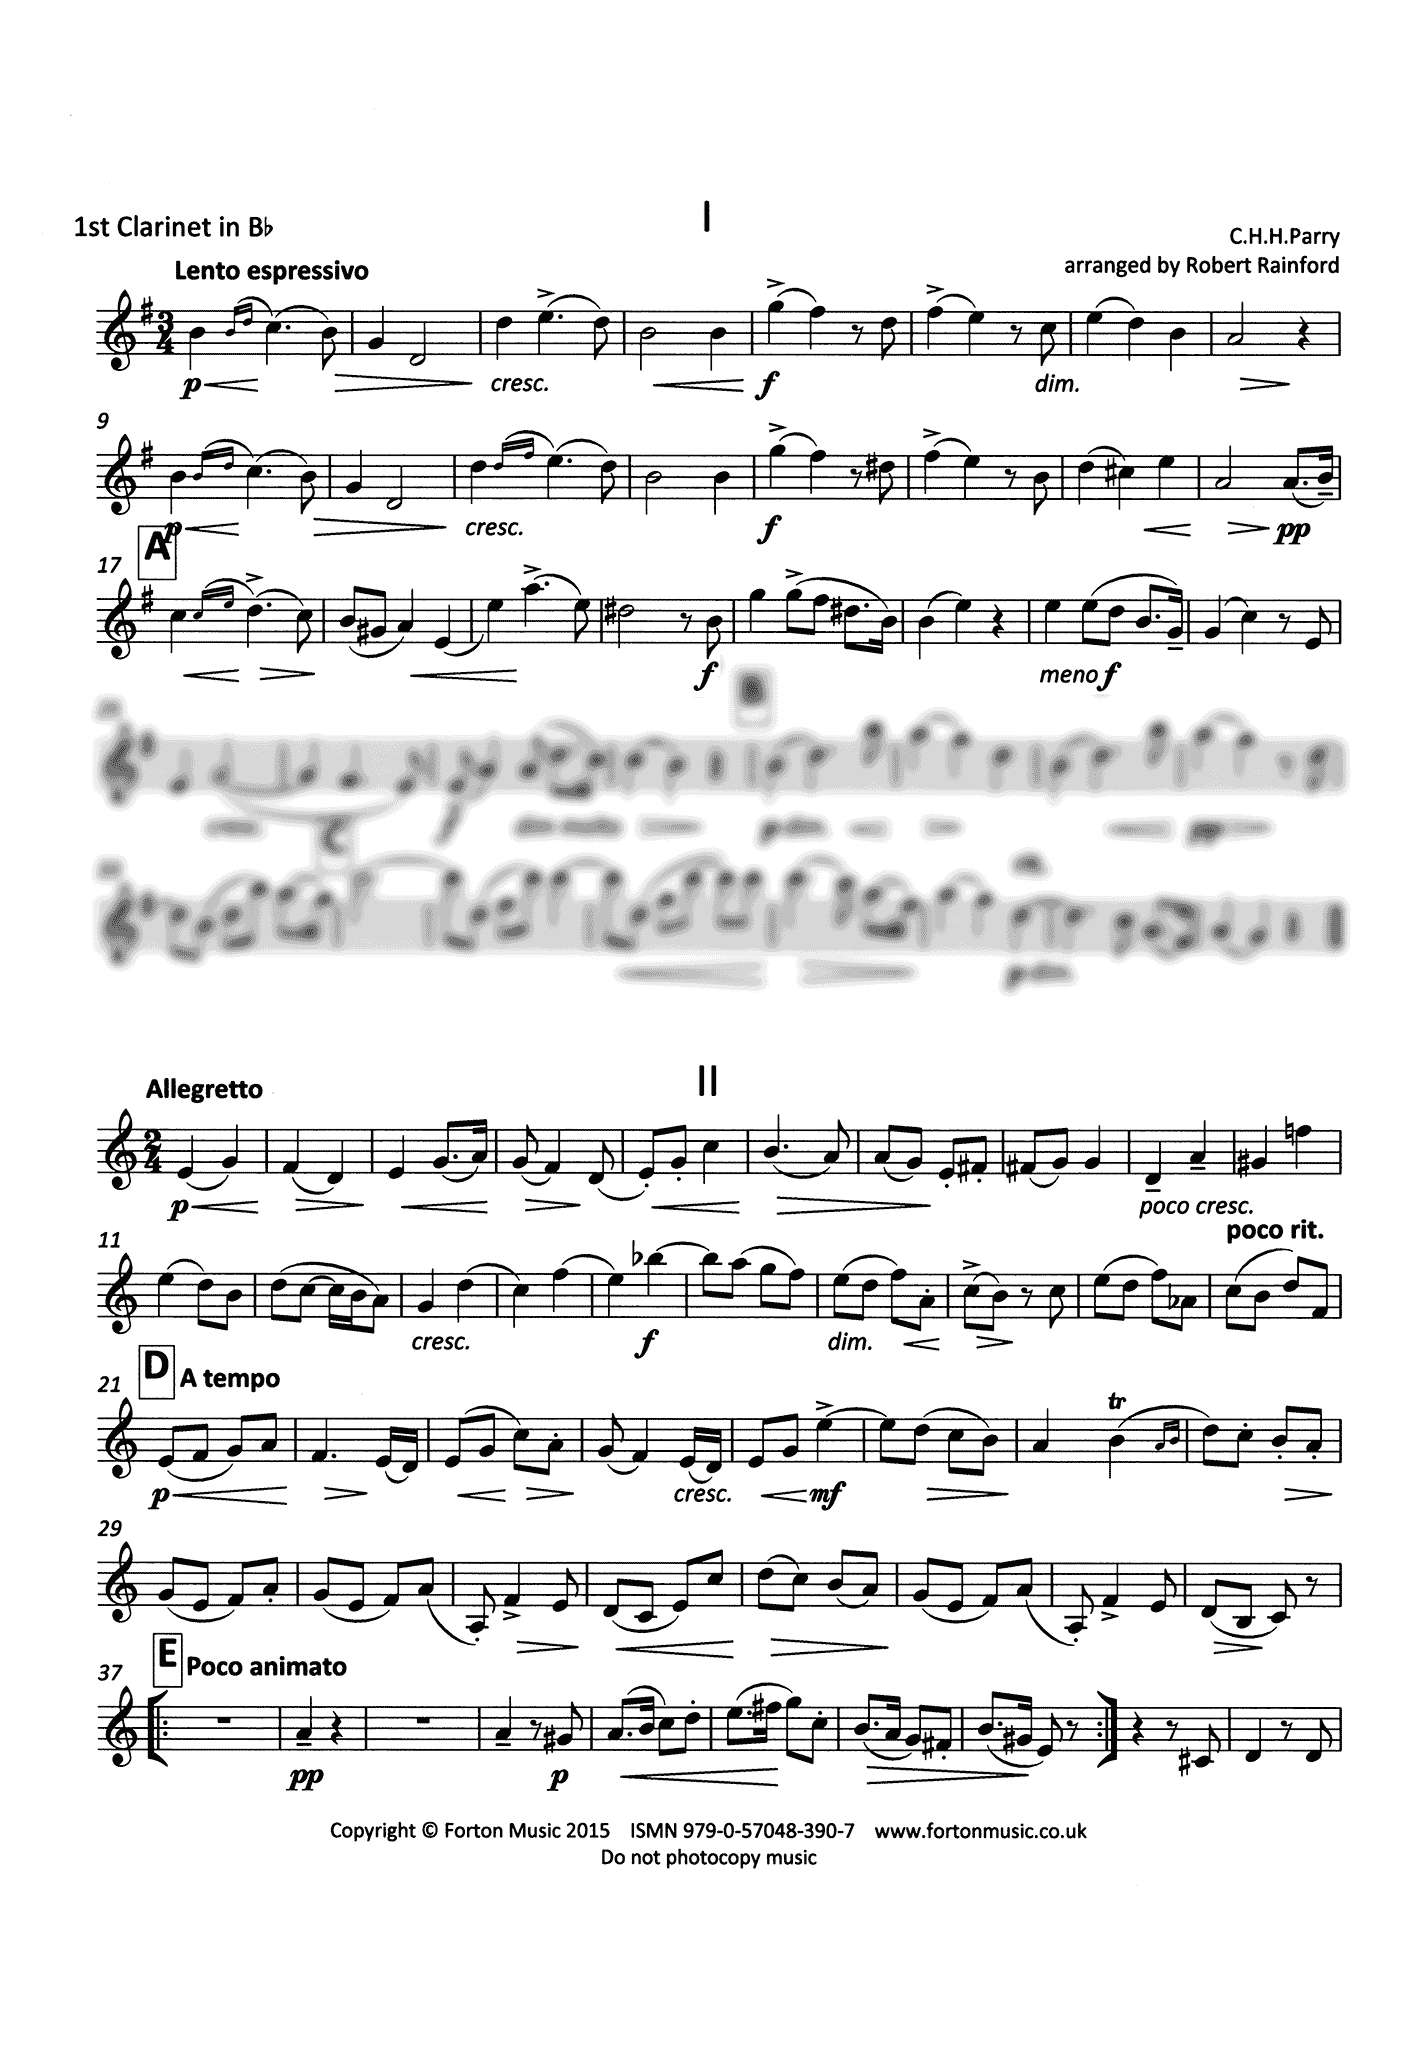 Parry Two Intermezzi clarinet trio arrangement first part